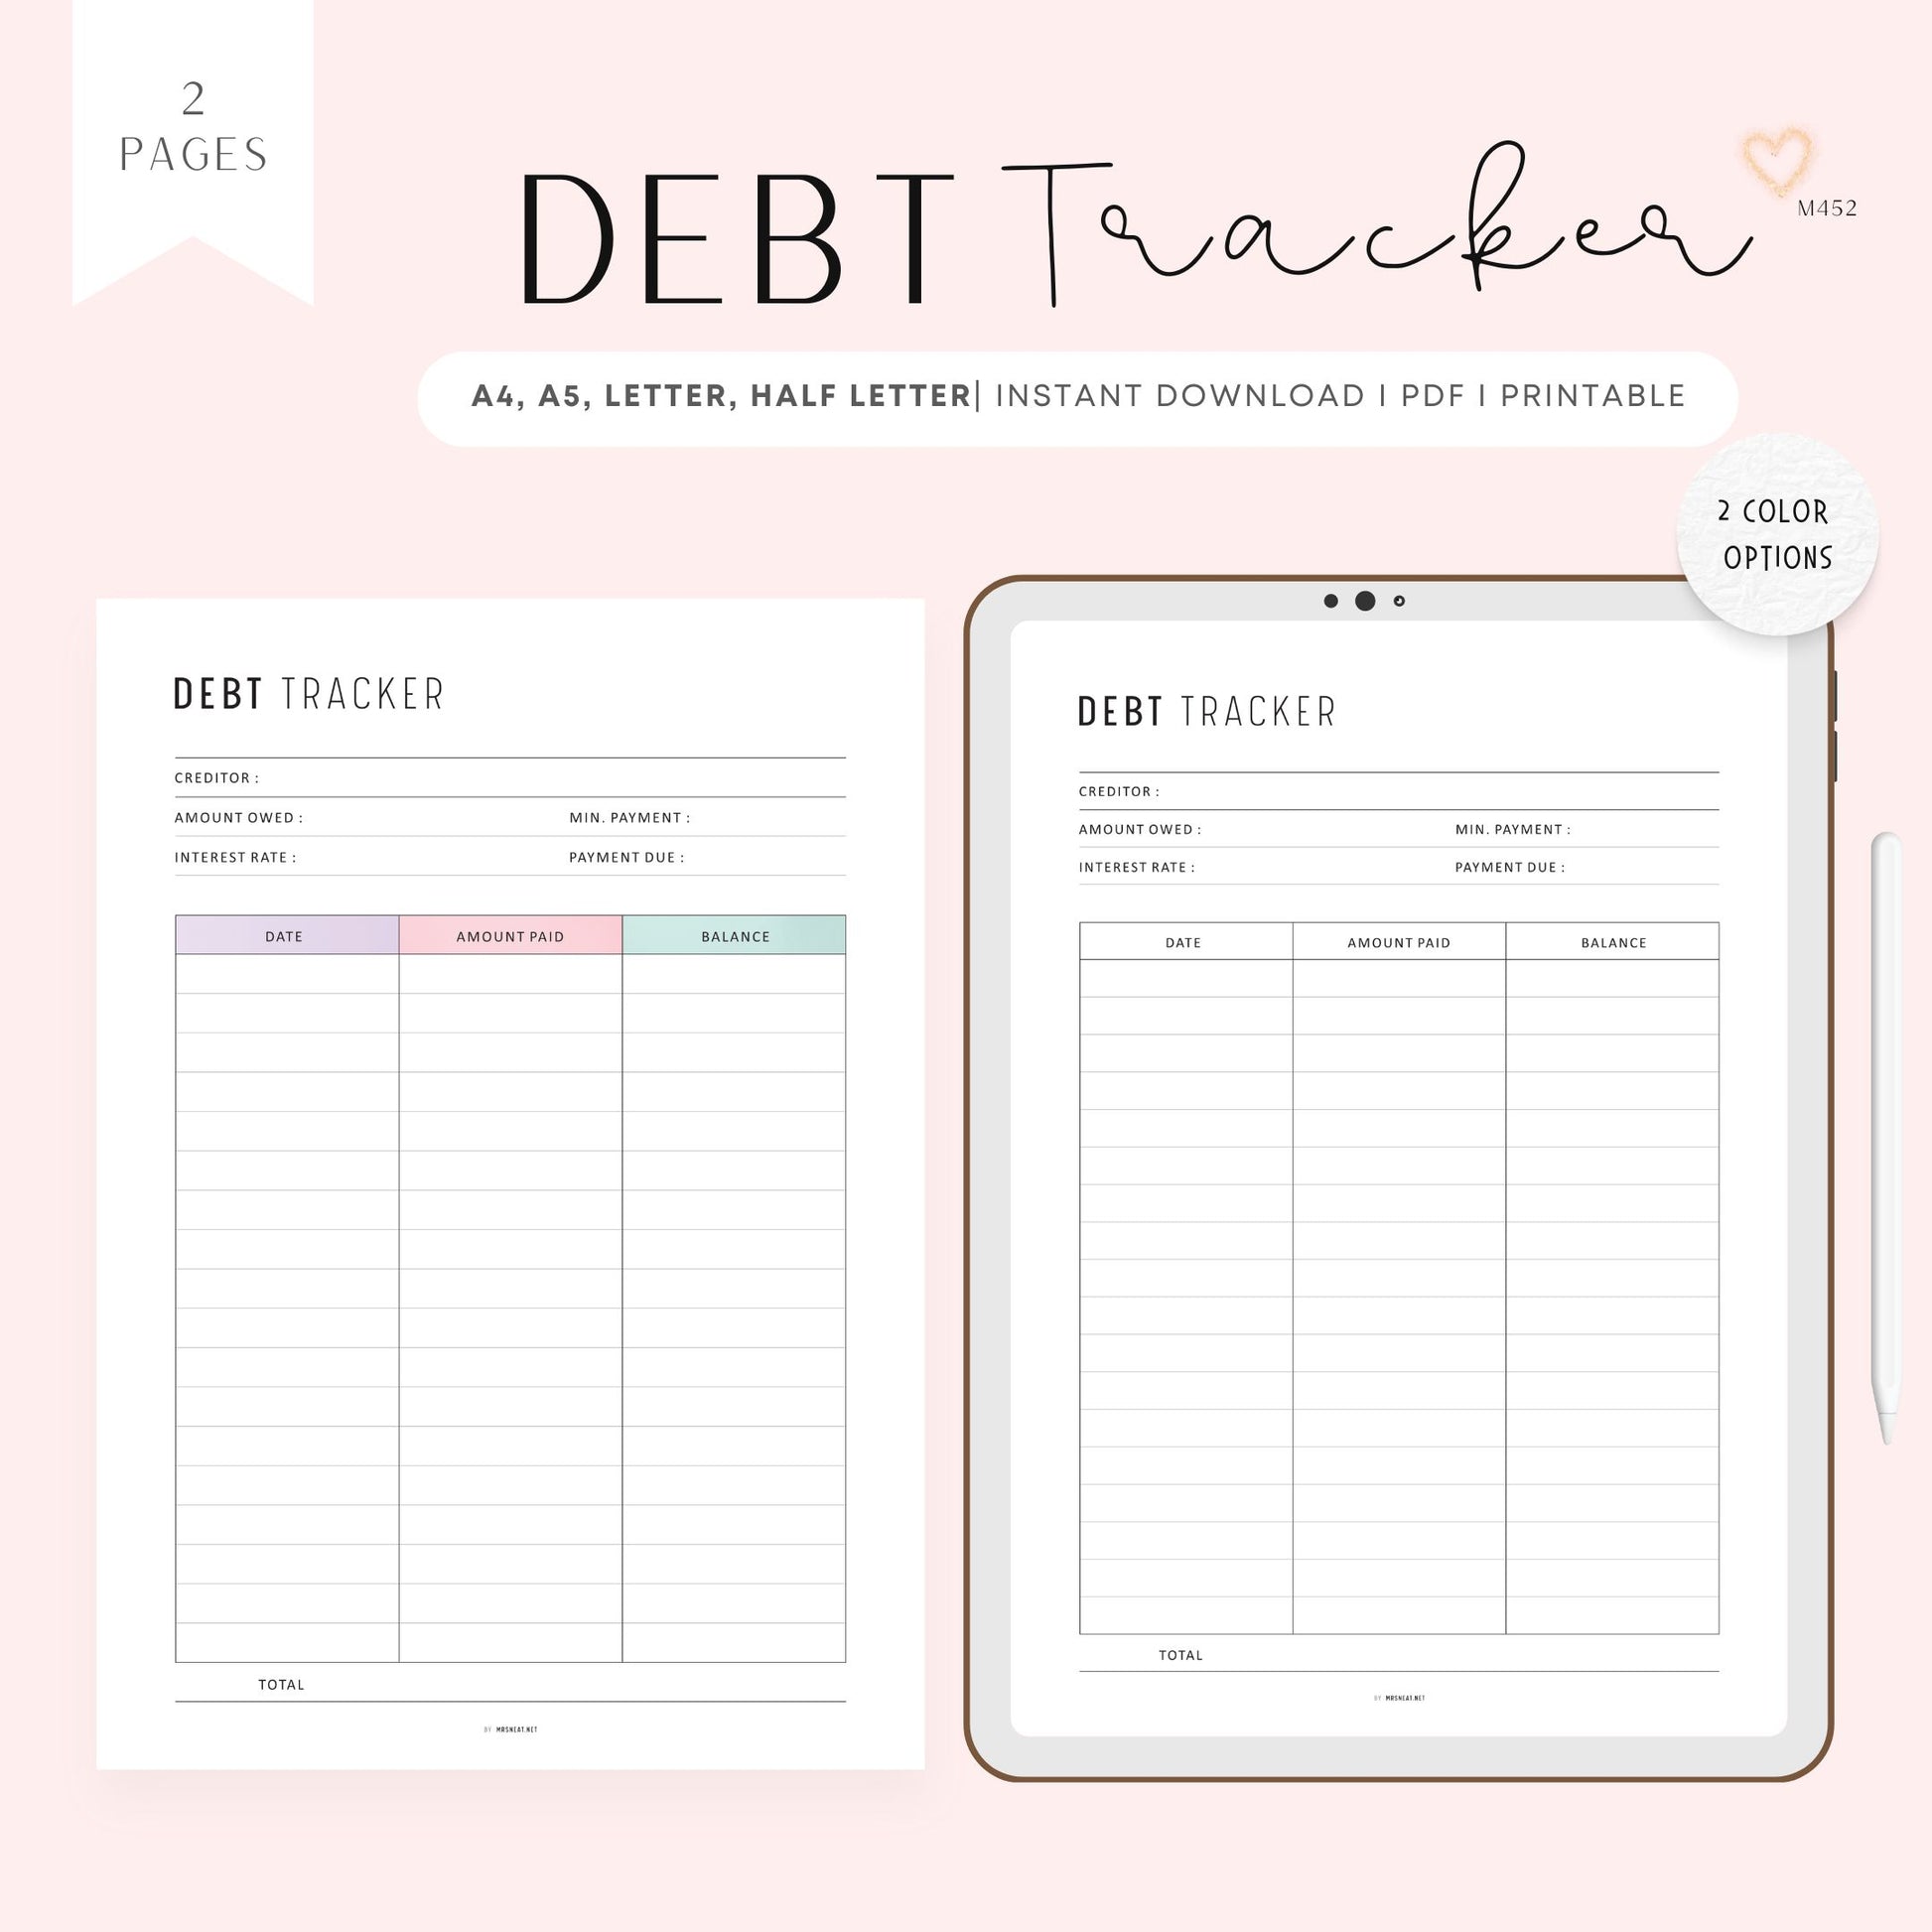 Debt Payment Tracker, Printable, A4, A5, Letter, Half Letter, Digital Planner, PDF, 2 Colors, Instant Download